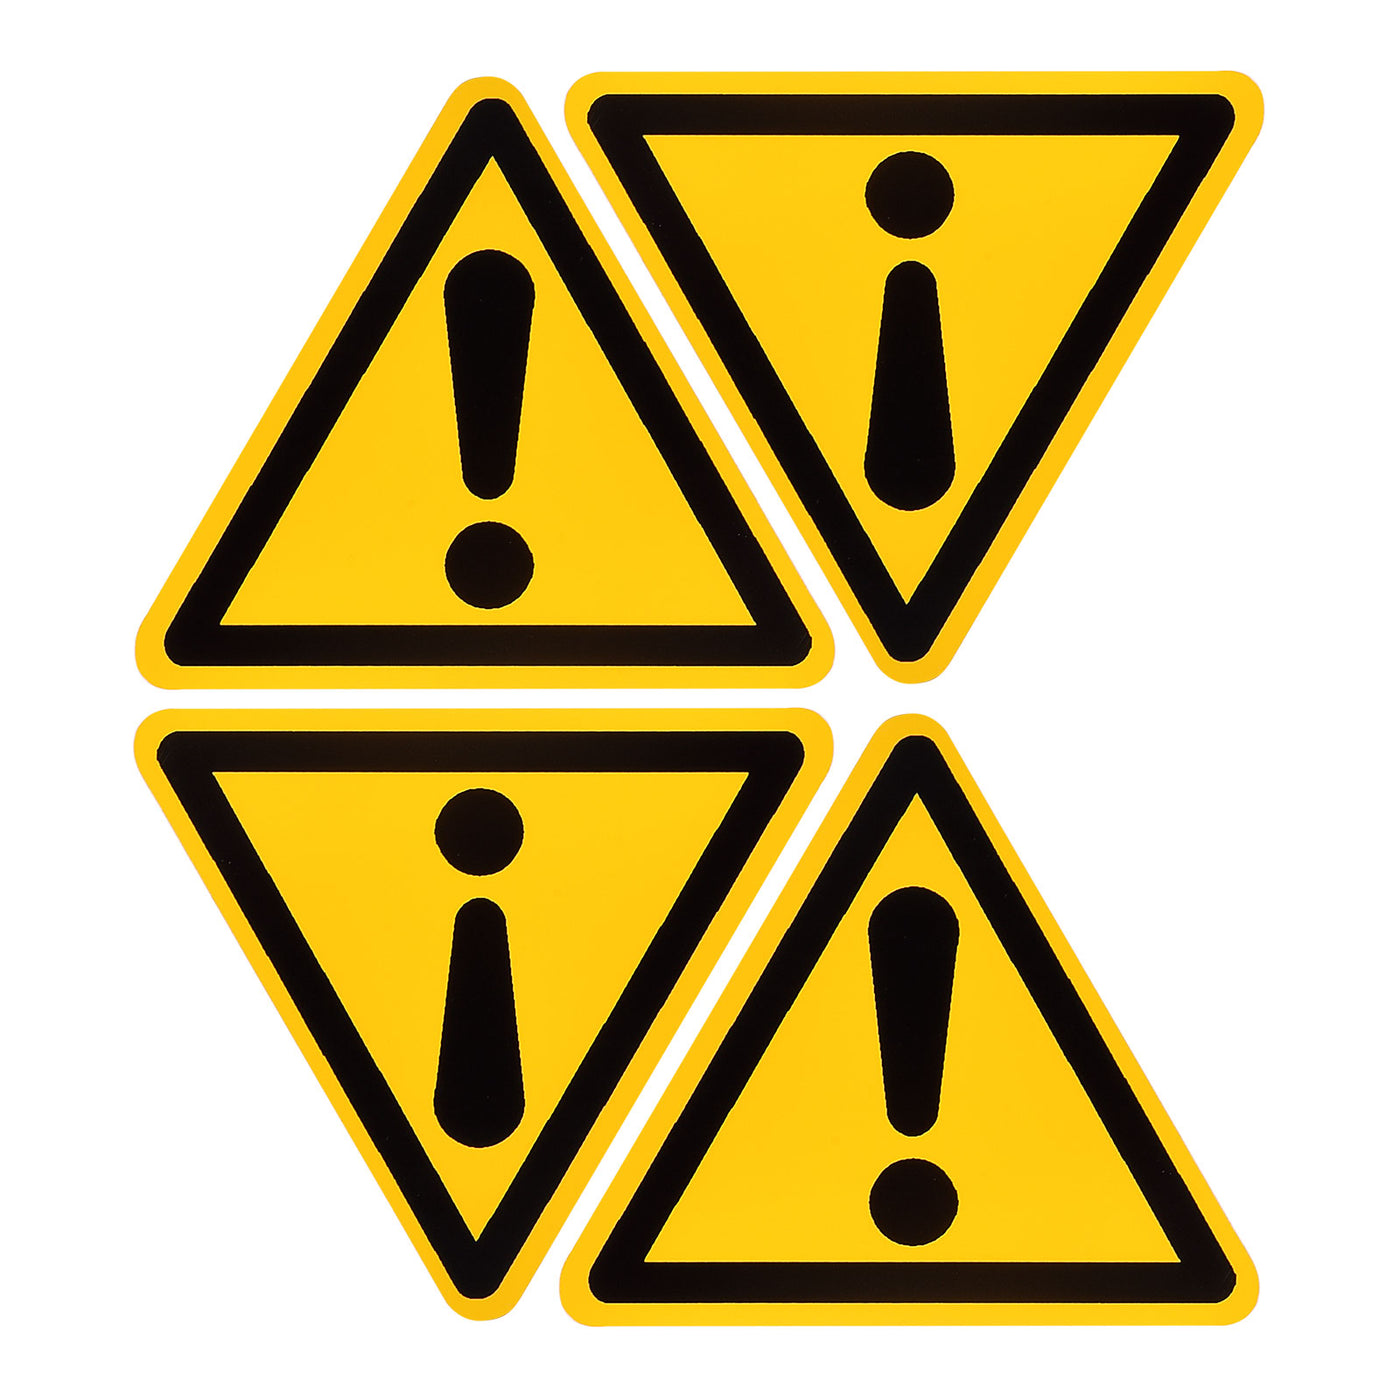 Harfington Triangle Caution Warning Sign Self Adhesive 50mm/1.95inch 4Pcs